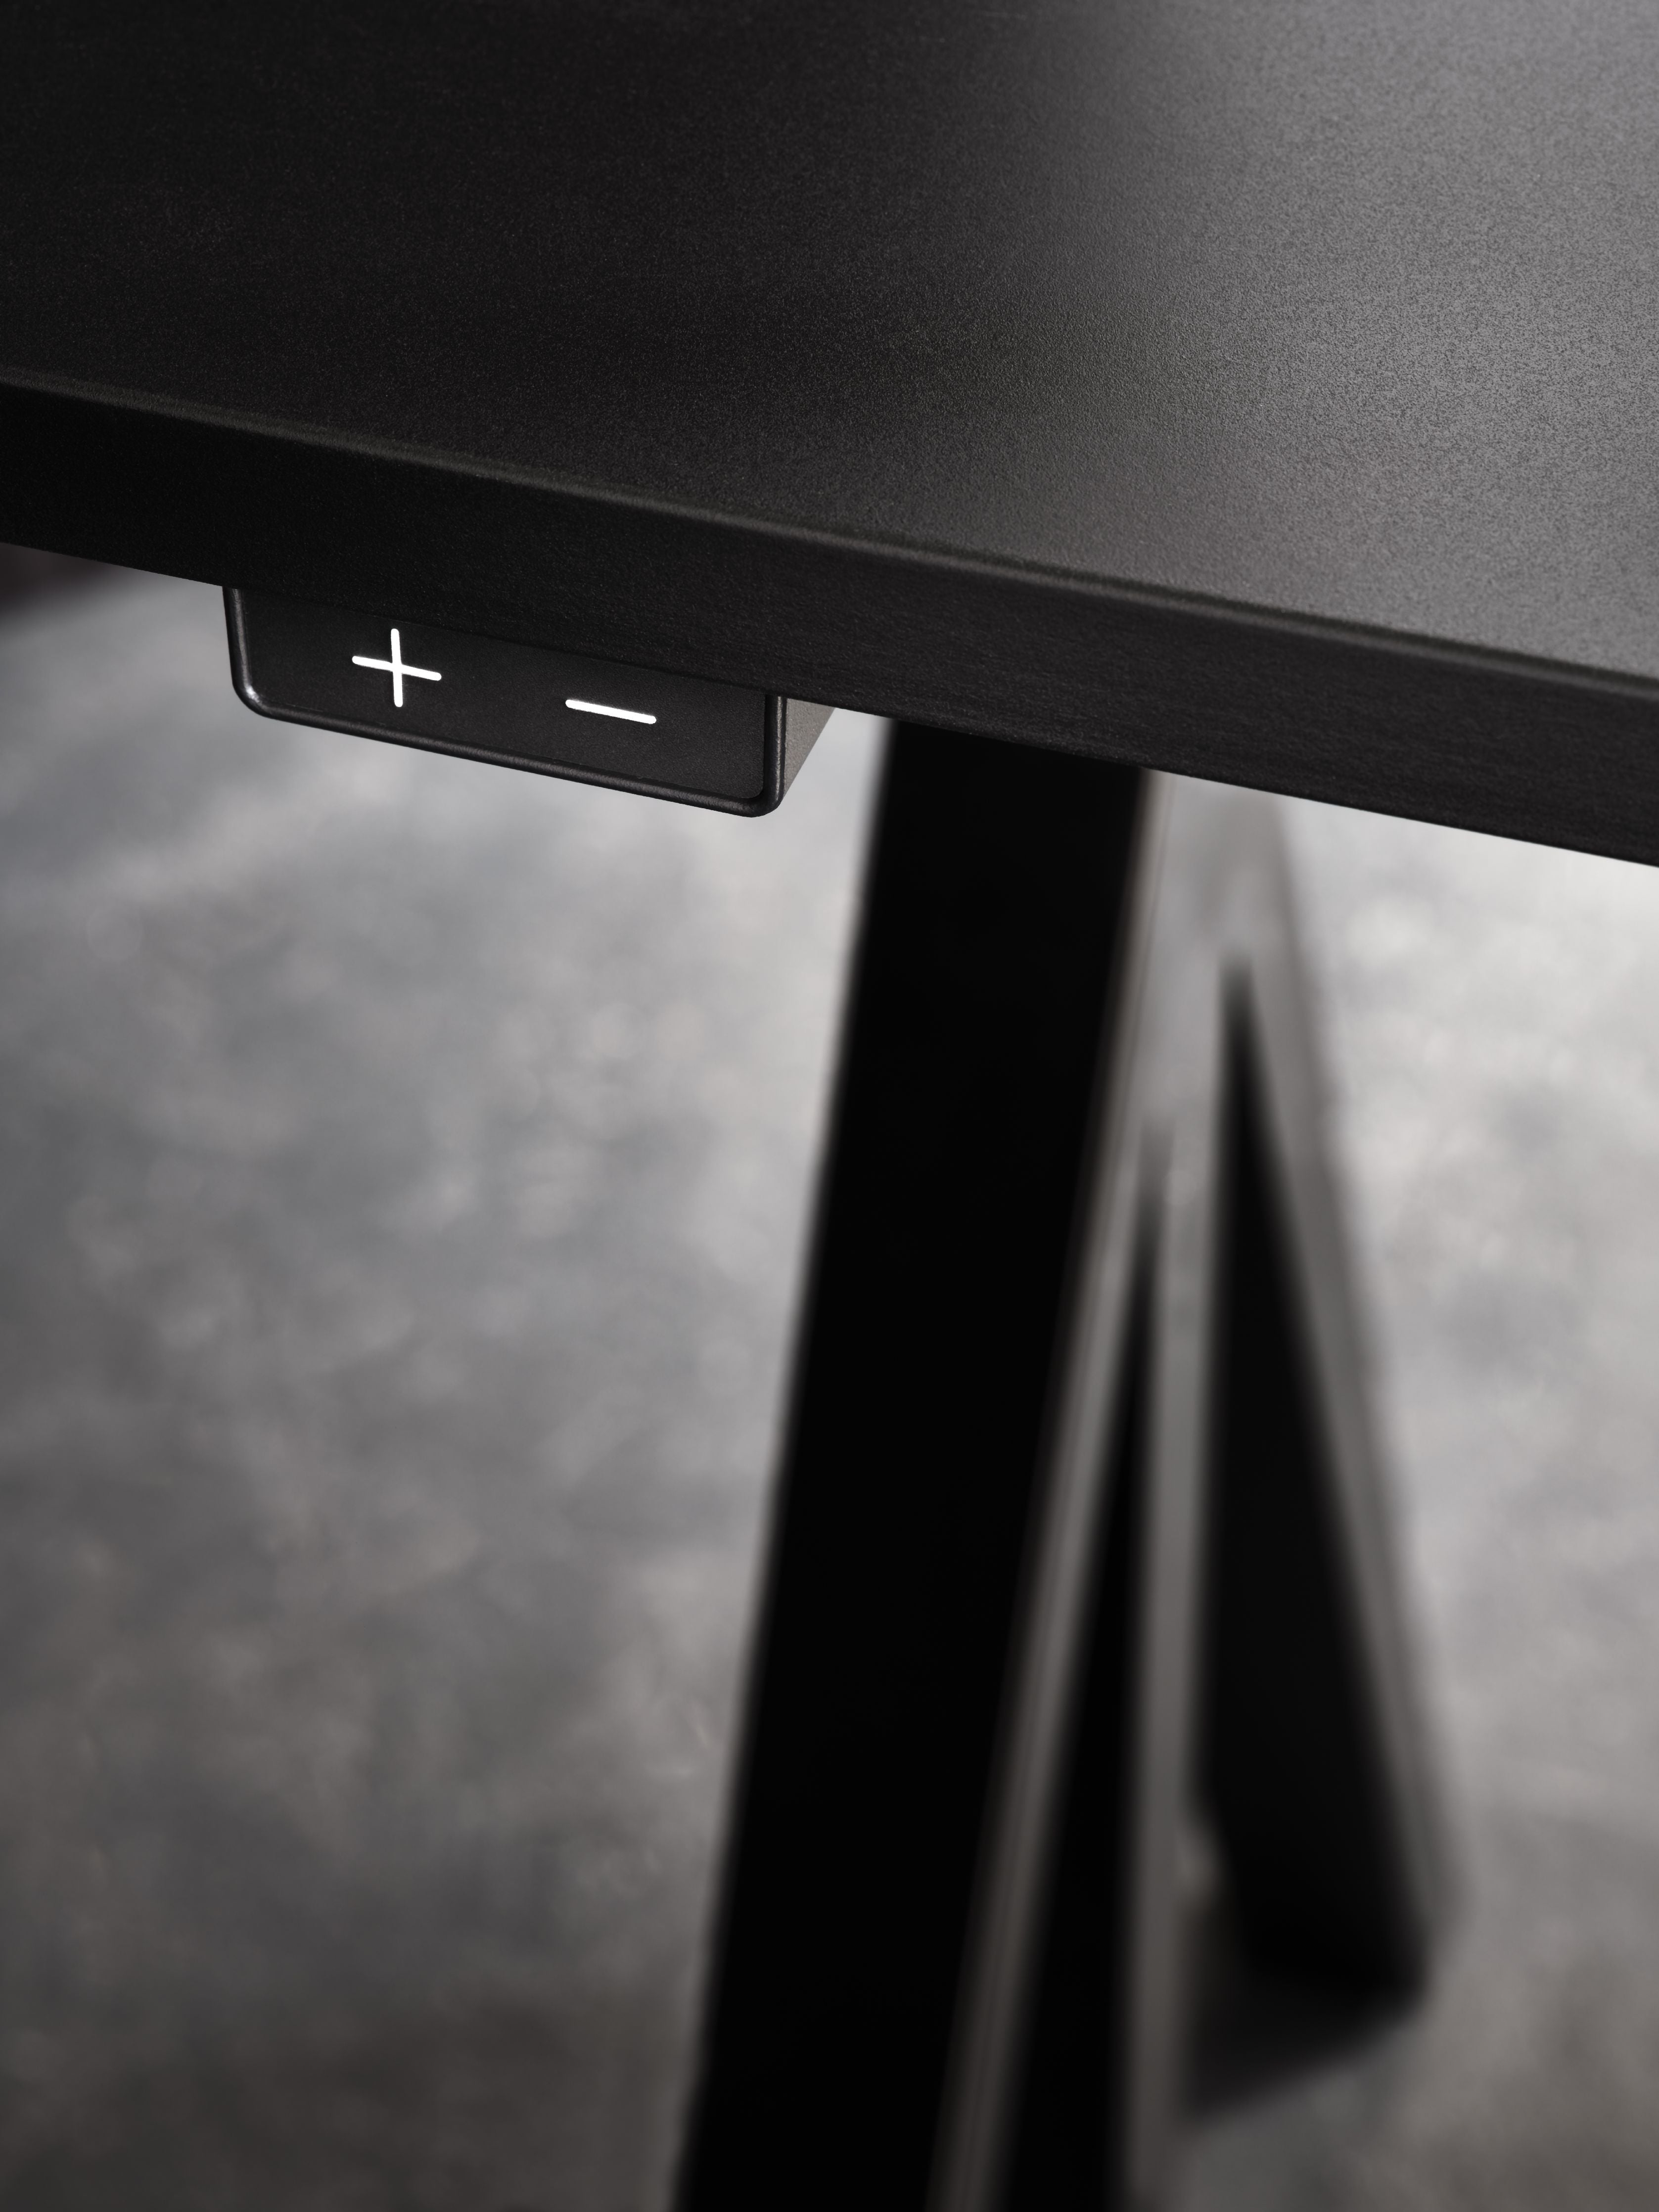 String Furniture Fungerar skrivbord 78x160 cm, svart/svart